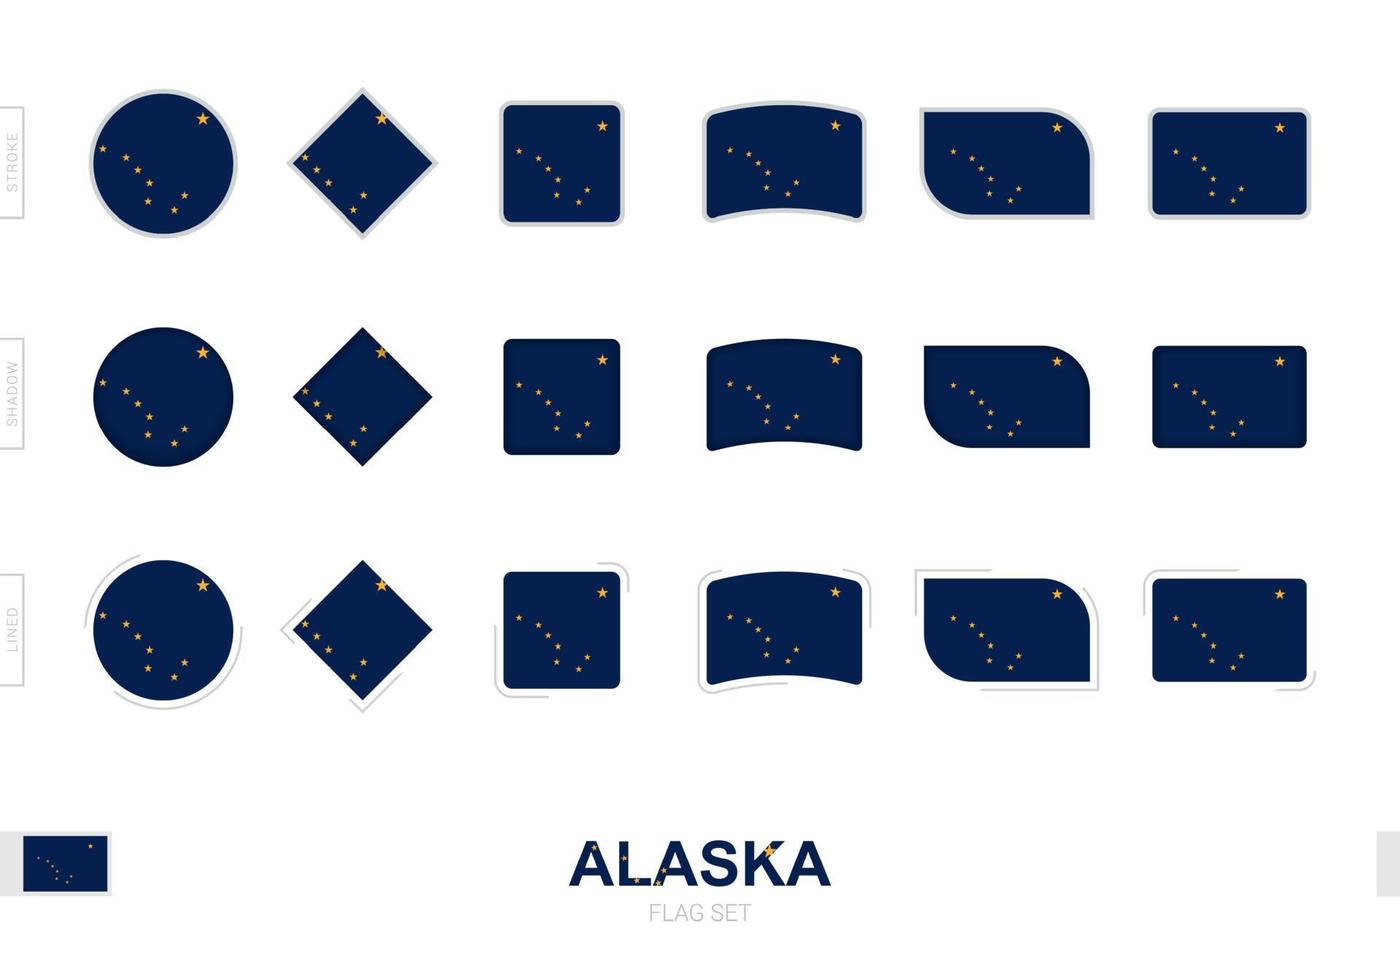 Alaska-Flaggen-Set, einfache Alaska-Flaggen mit drei verschiedenen Effekten. vektor